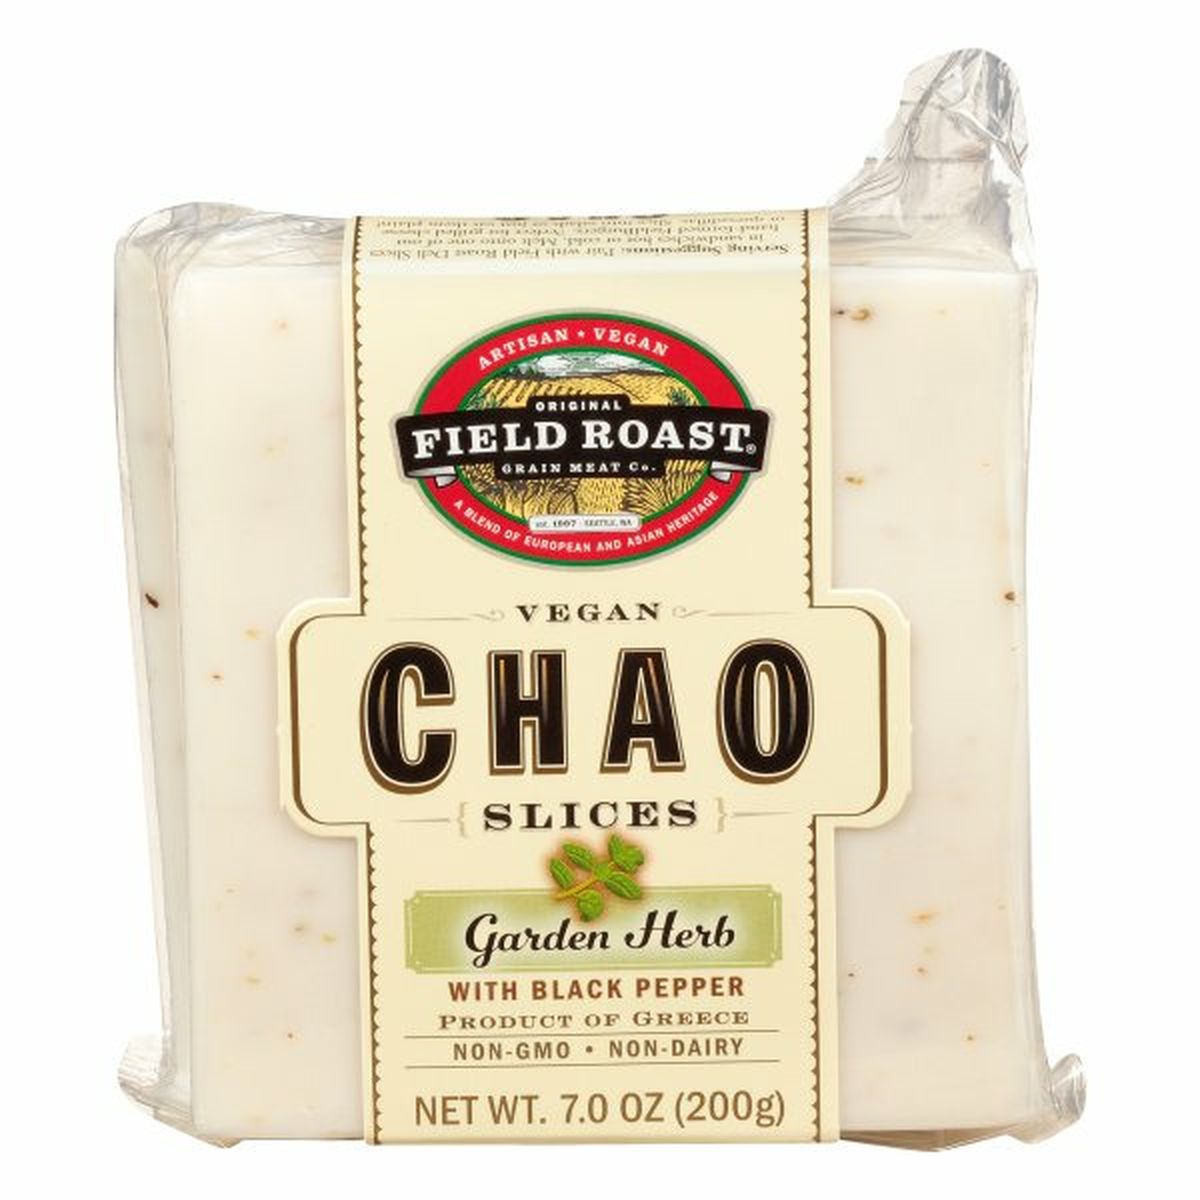 Calories in Field Roast Chao Chao Slices, Vegan, Garden Herb